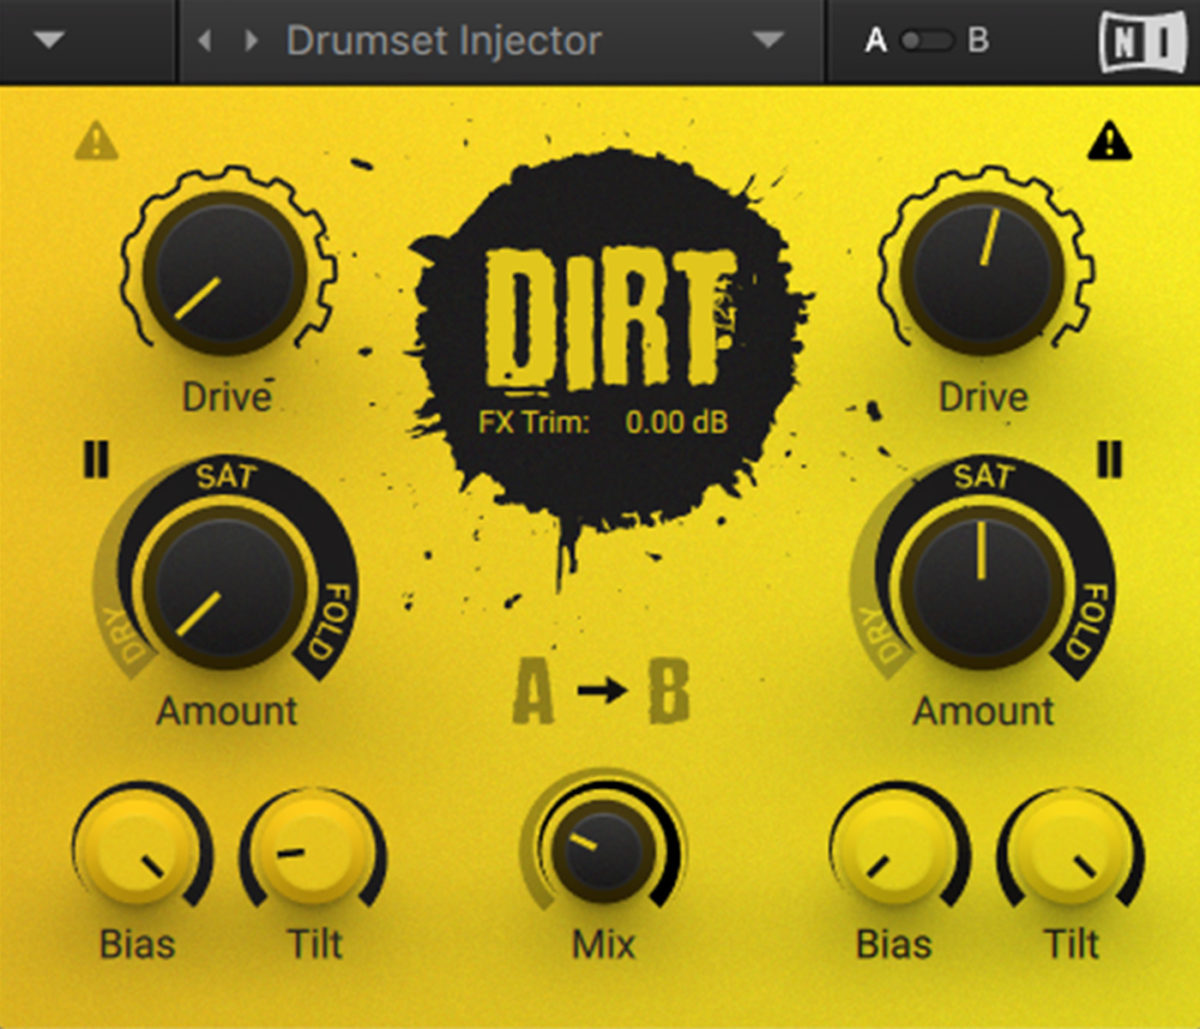 The Drumset Injector preset